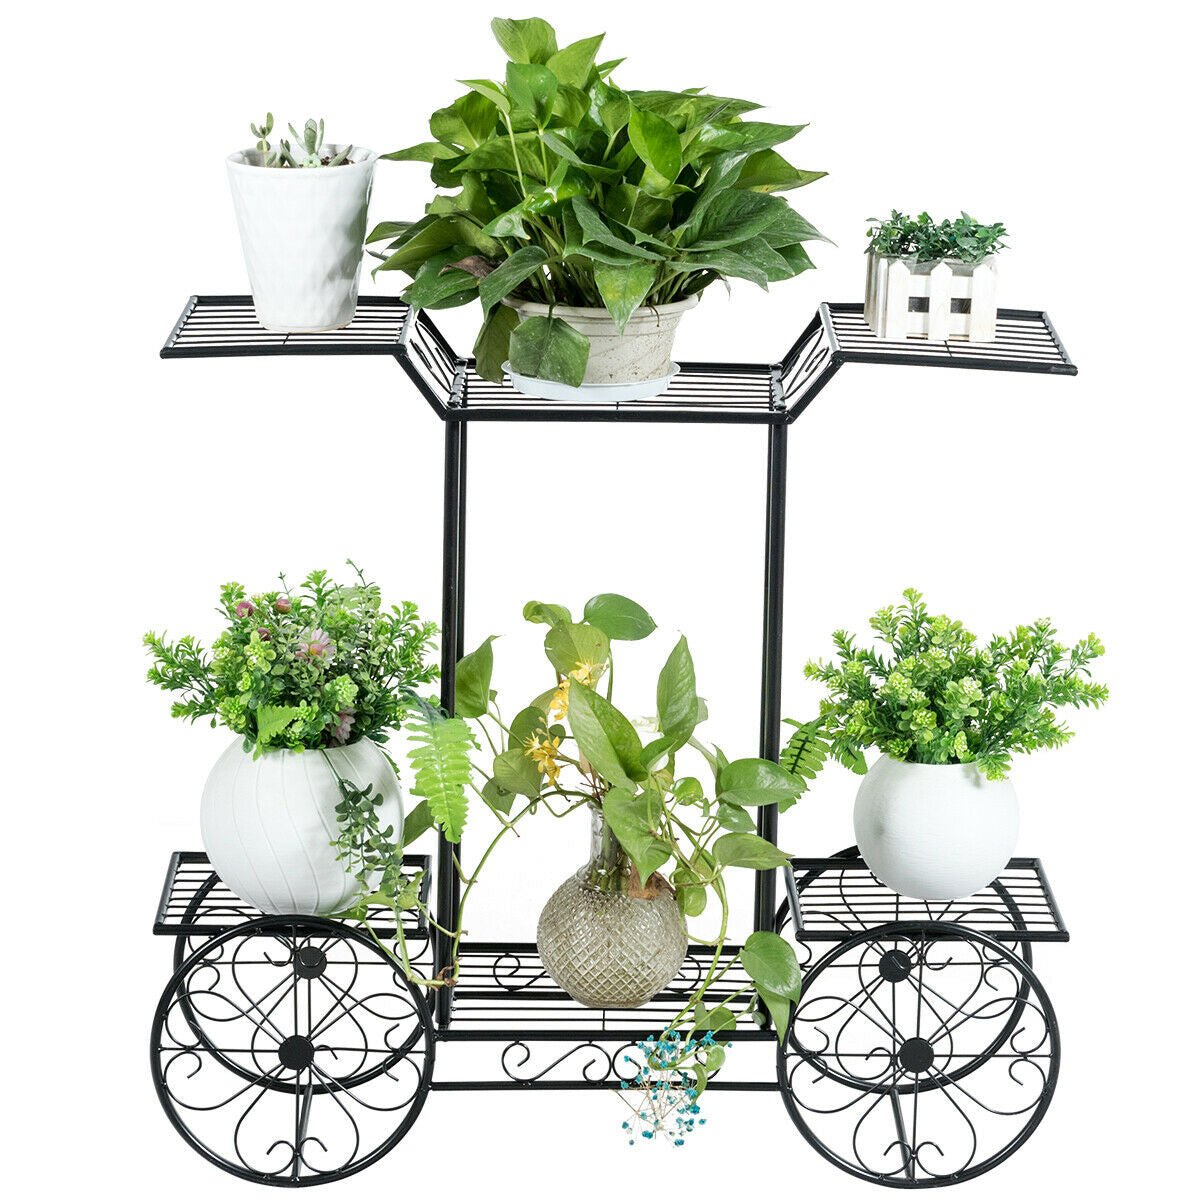 6-Tier Garden Cart Flower Rack Display Decor Pot Plant Holder - Gallery Canada